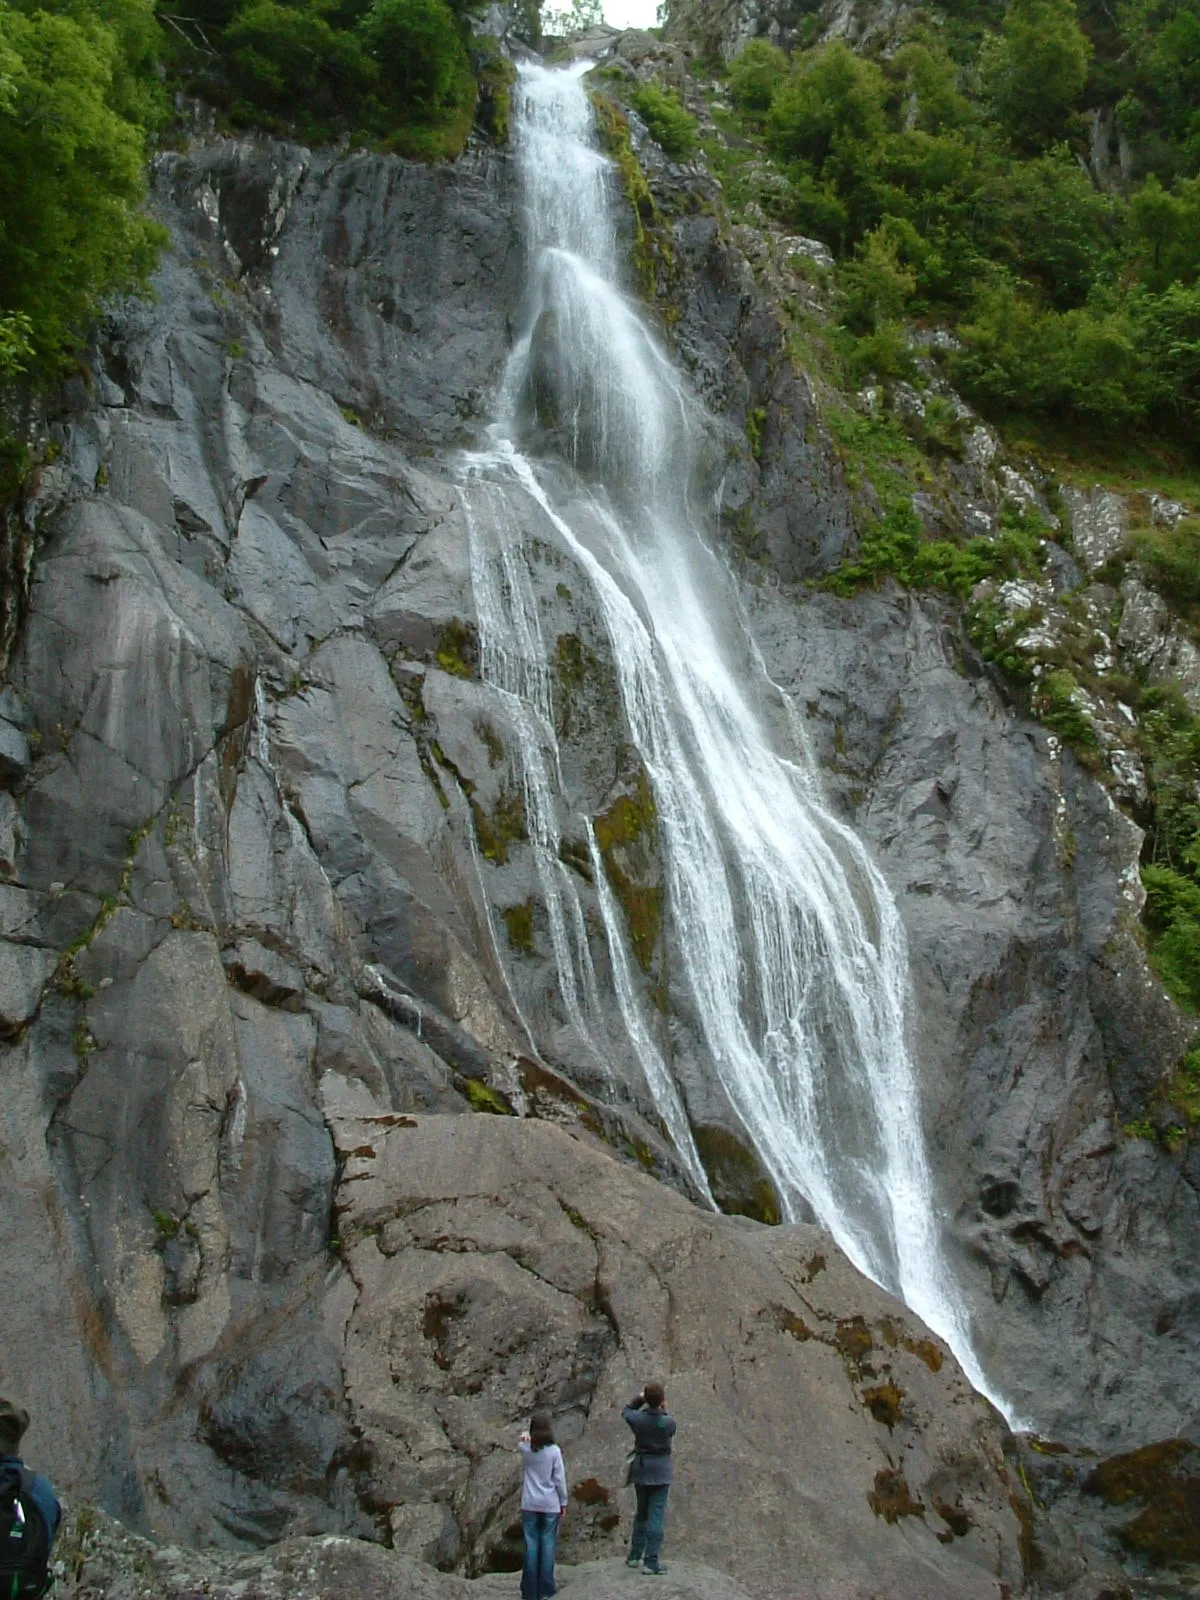 Photo showing: Aber Falls, Gwynedd.
Taken by James@hopgrove, May 2004.